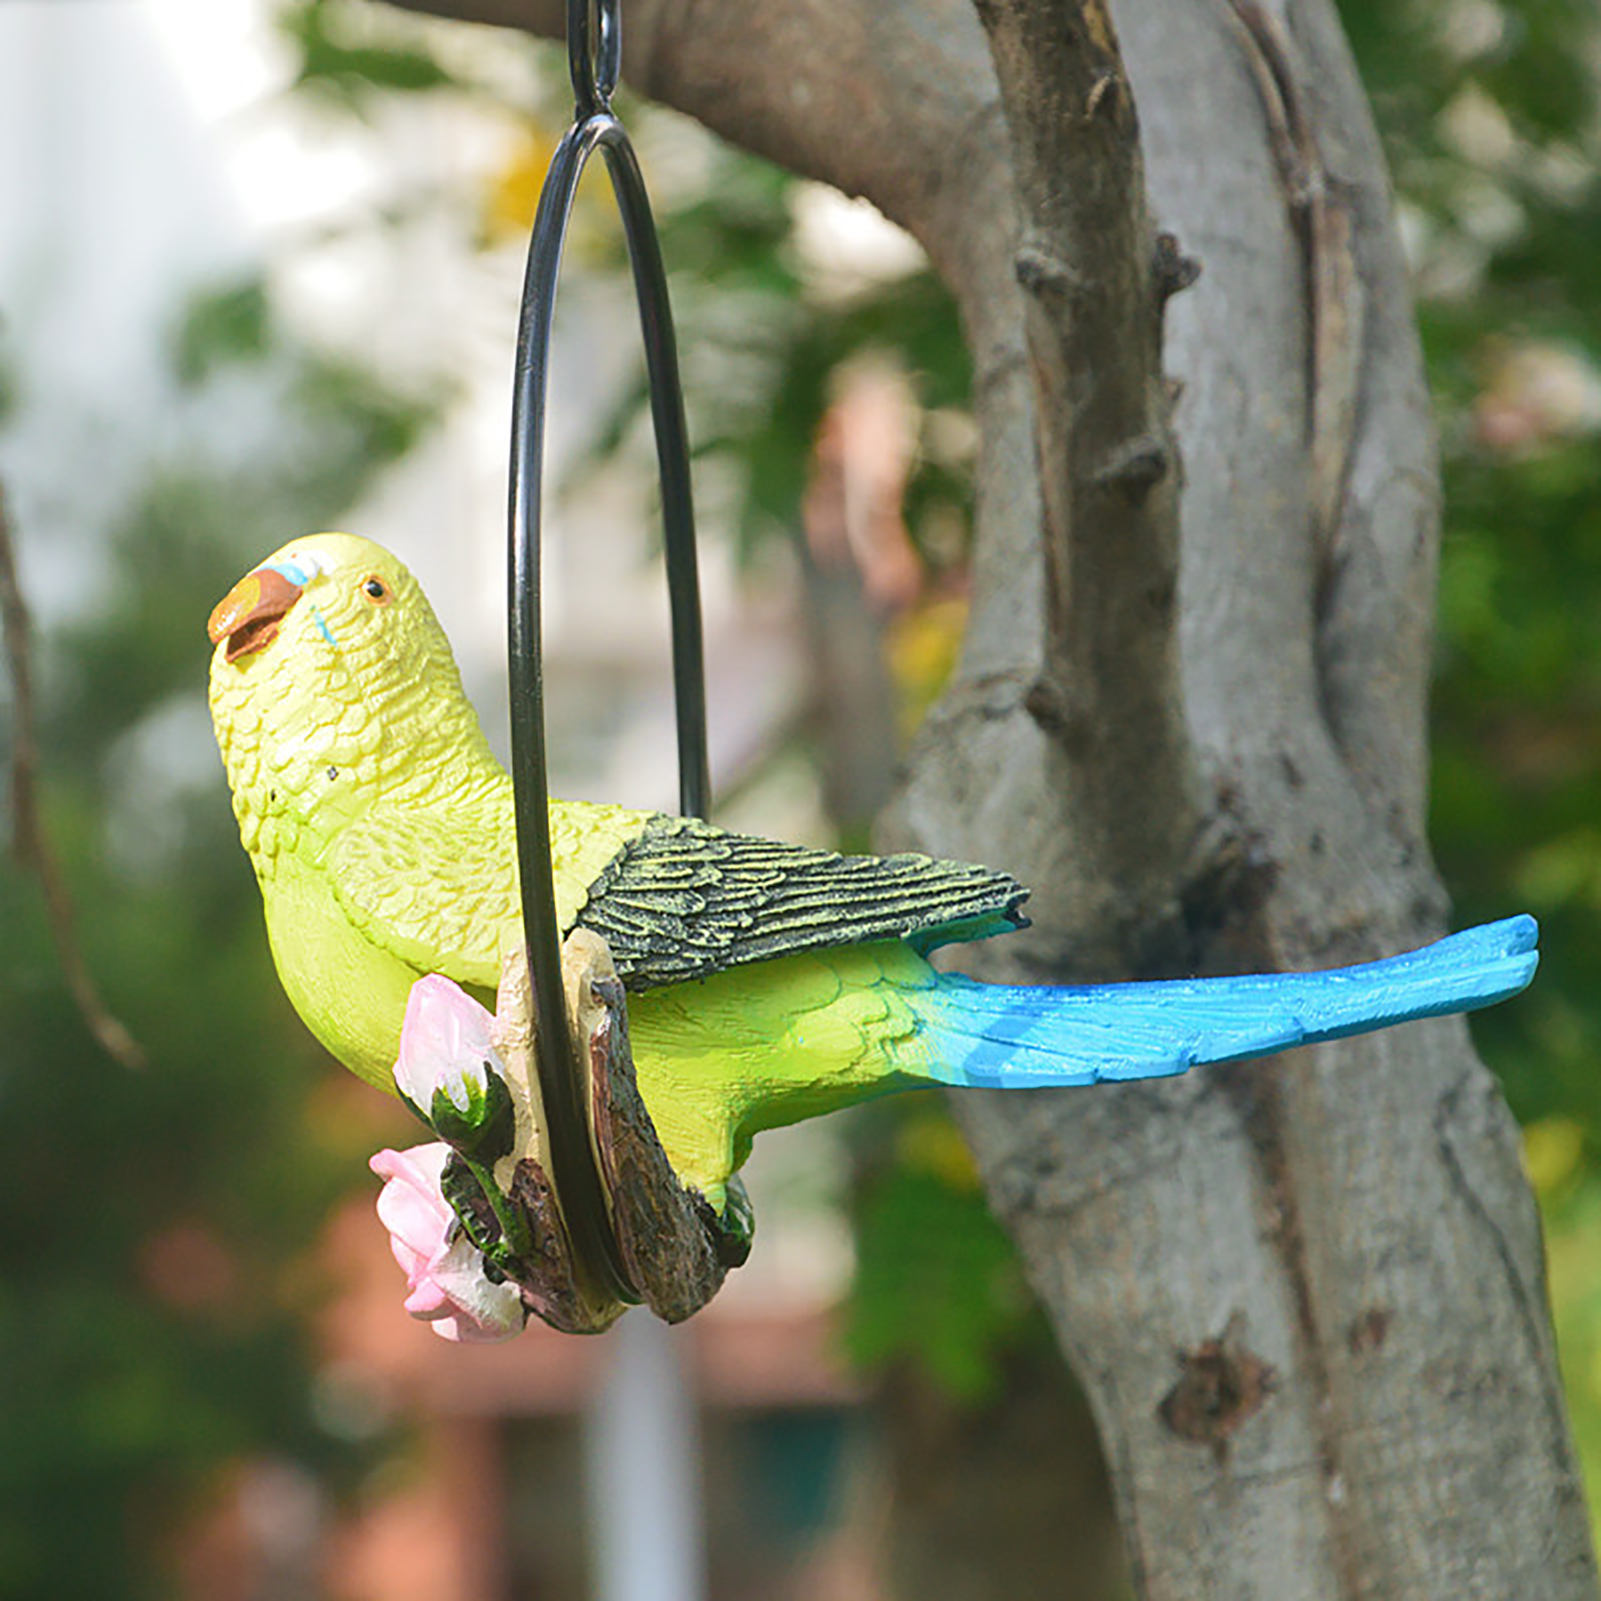 IMSHIE Parrot Decor Sculpture on Ring